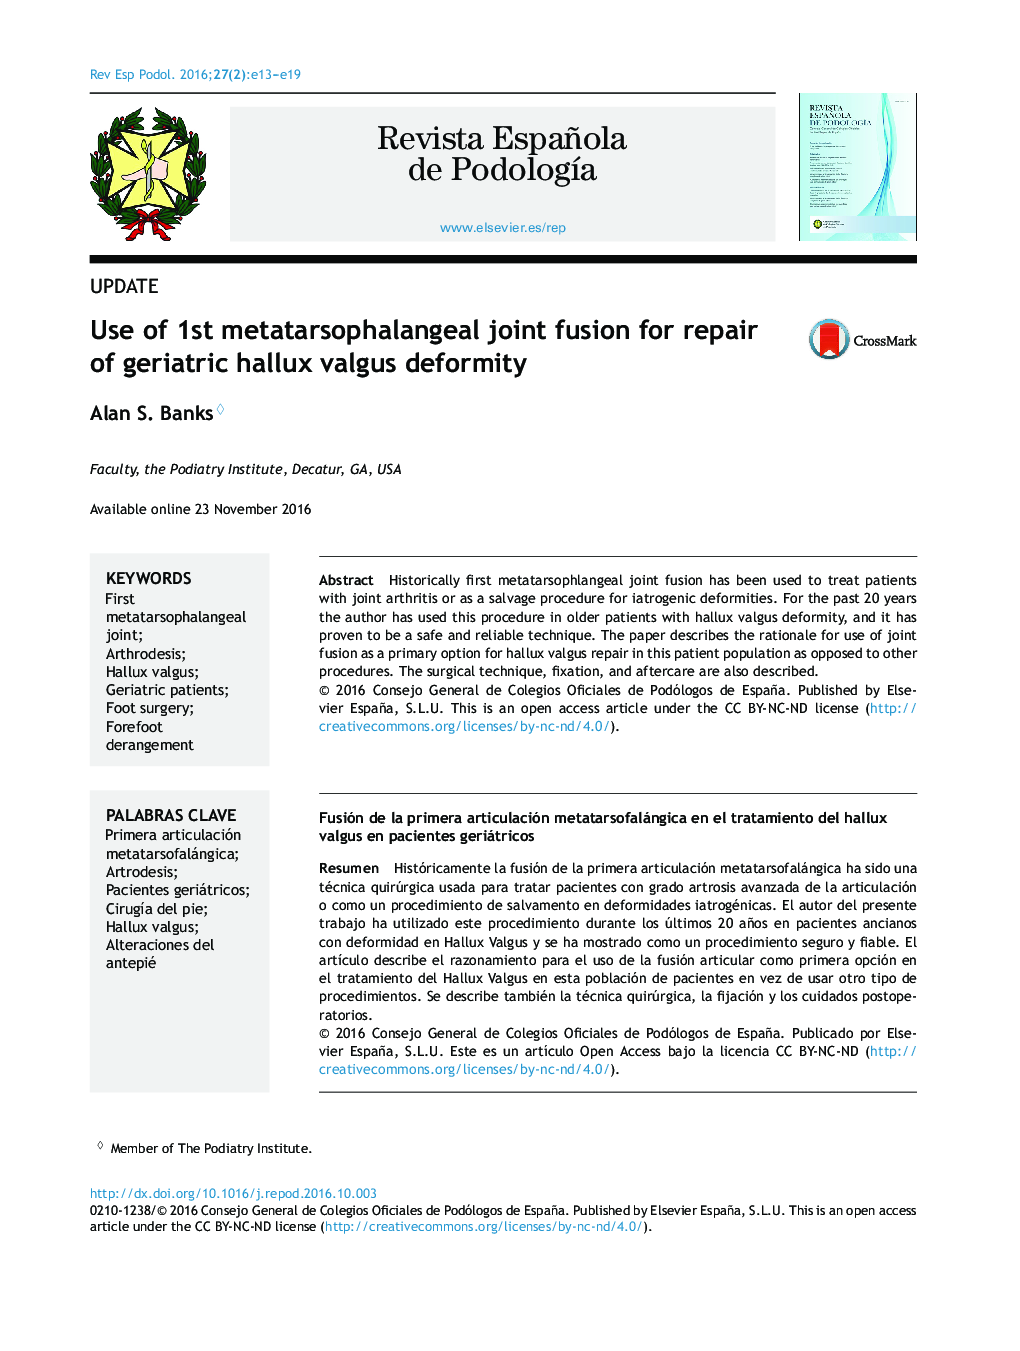 Use of 1st metatarsophalangeal joint fusion for repair of geriatric hallux valgus deformity